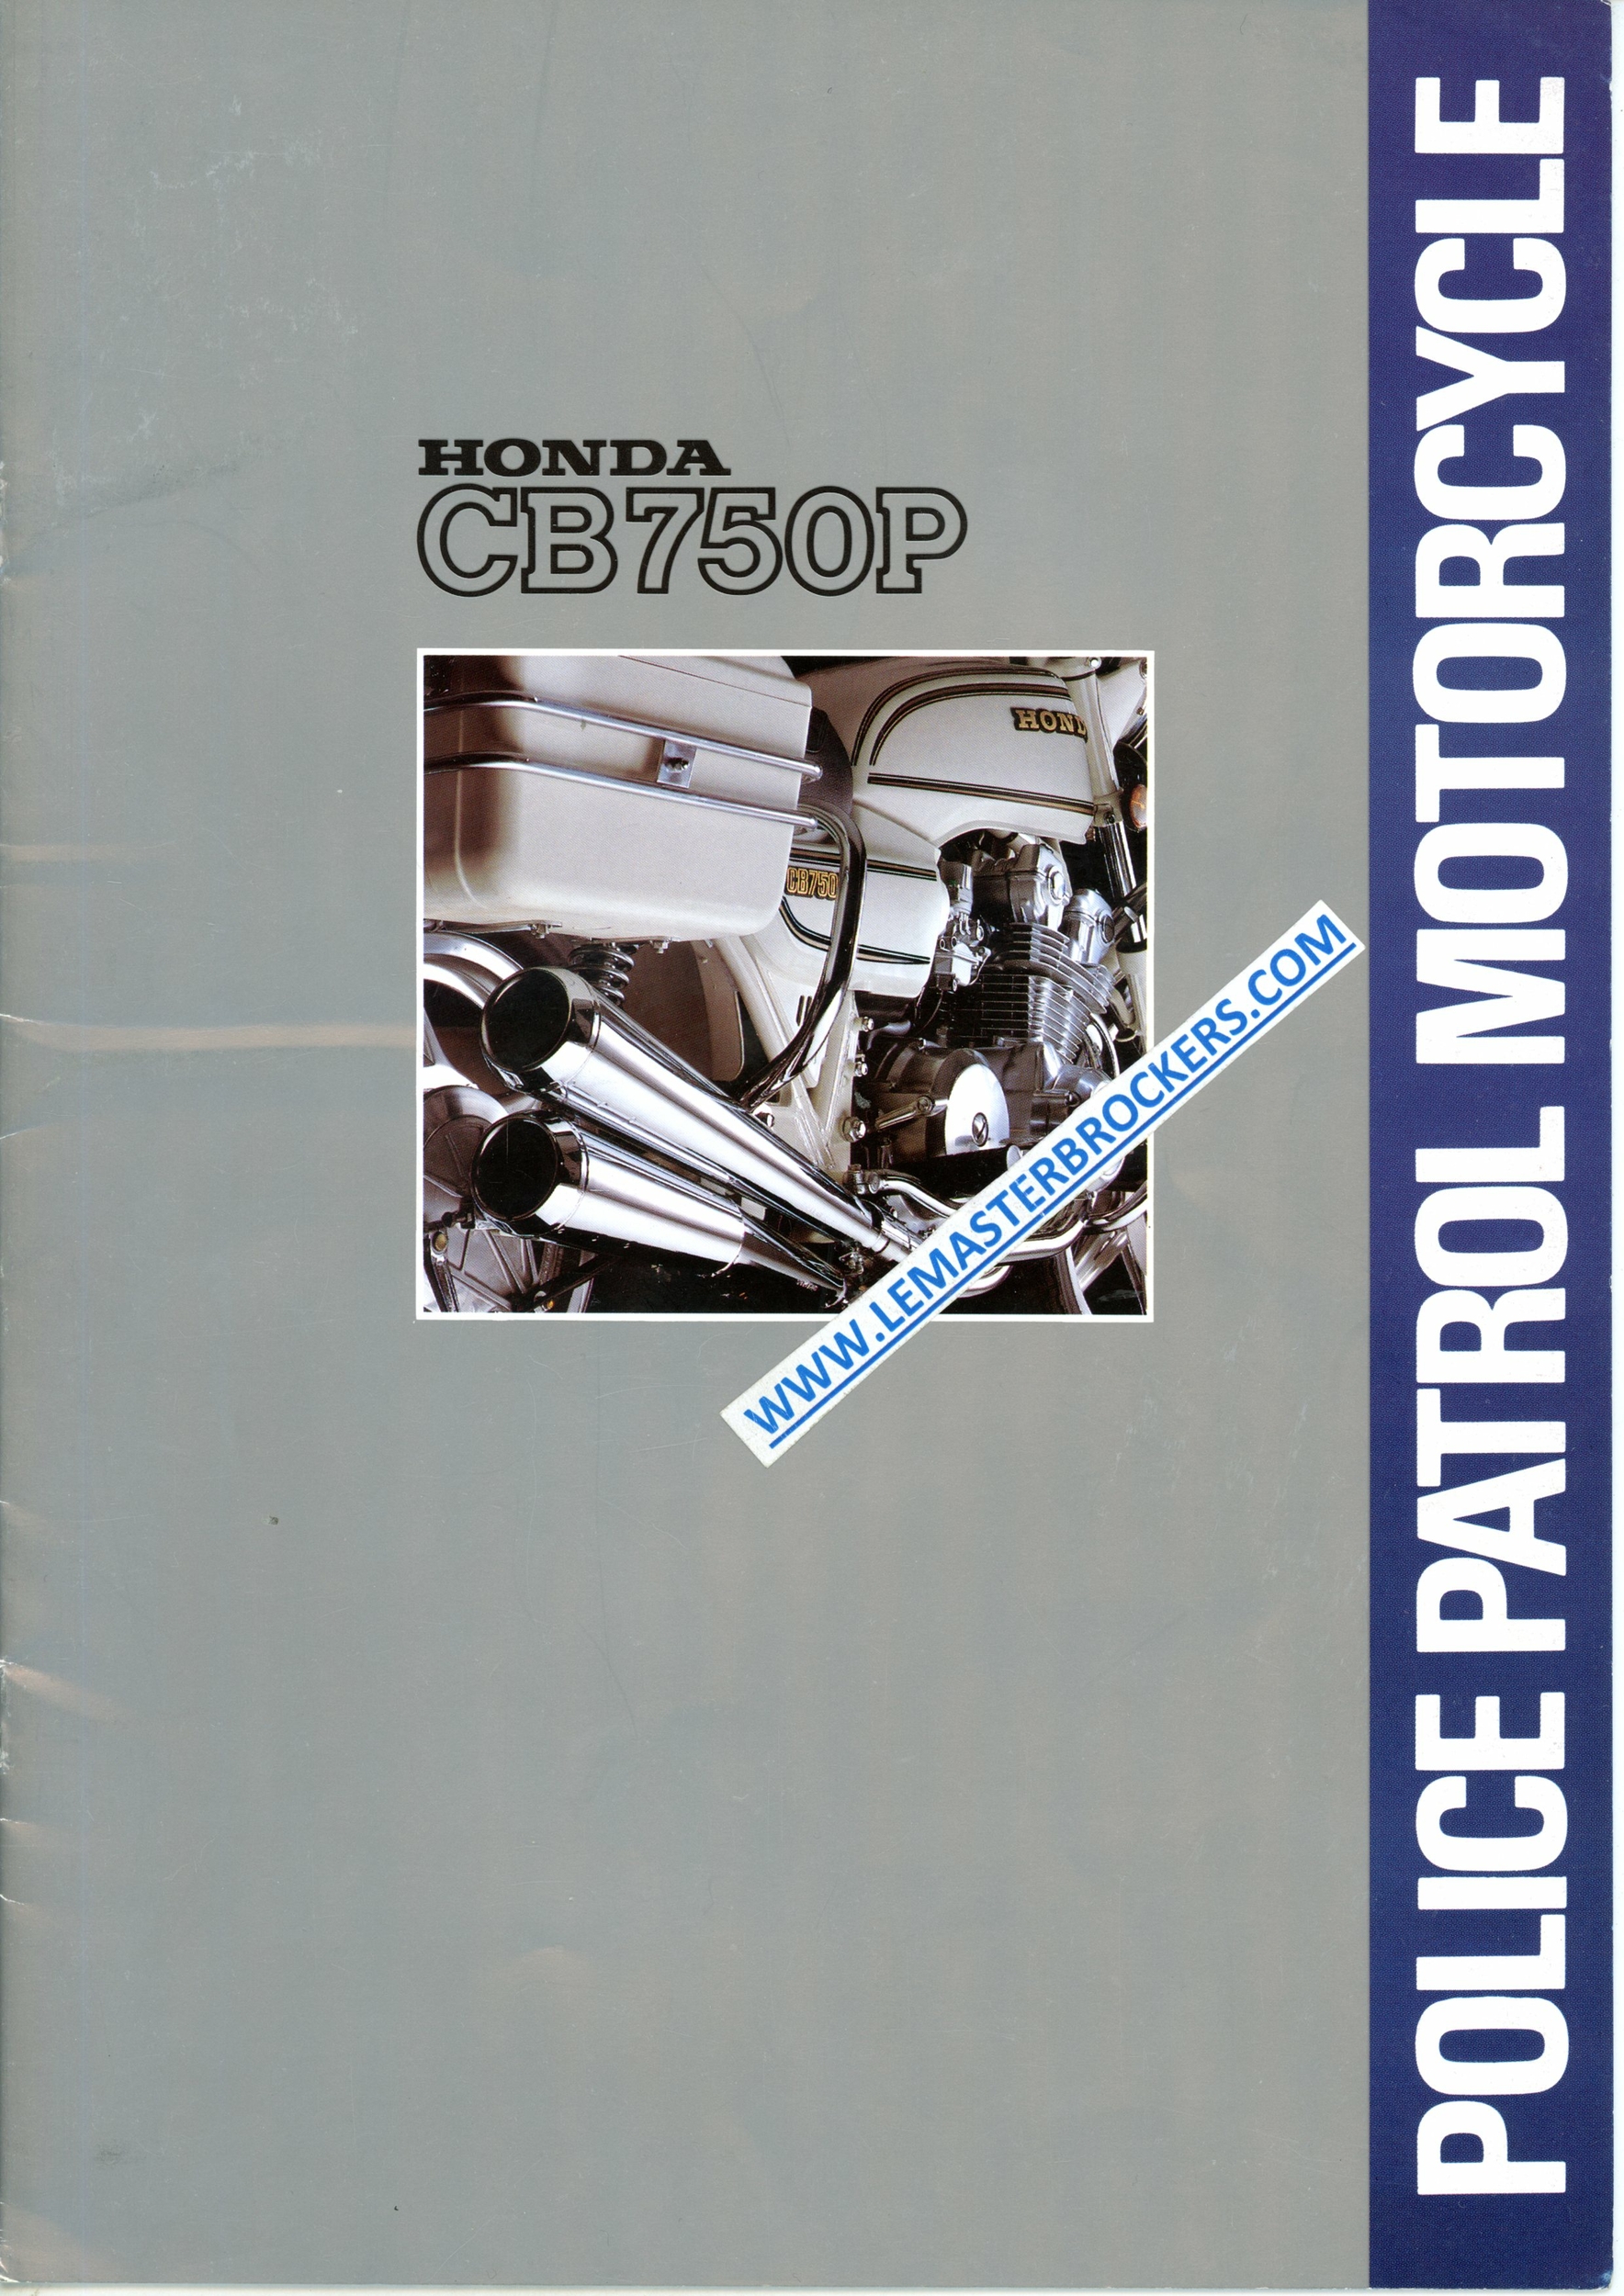 HONDA CB750K POLICE - PATROL MOTORCYCLE BROCHURE